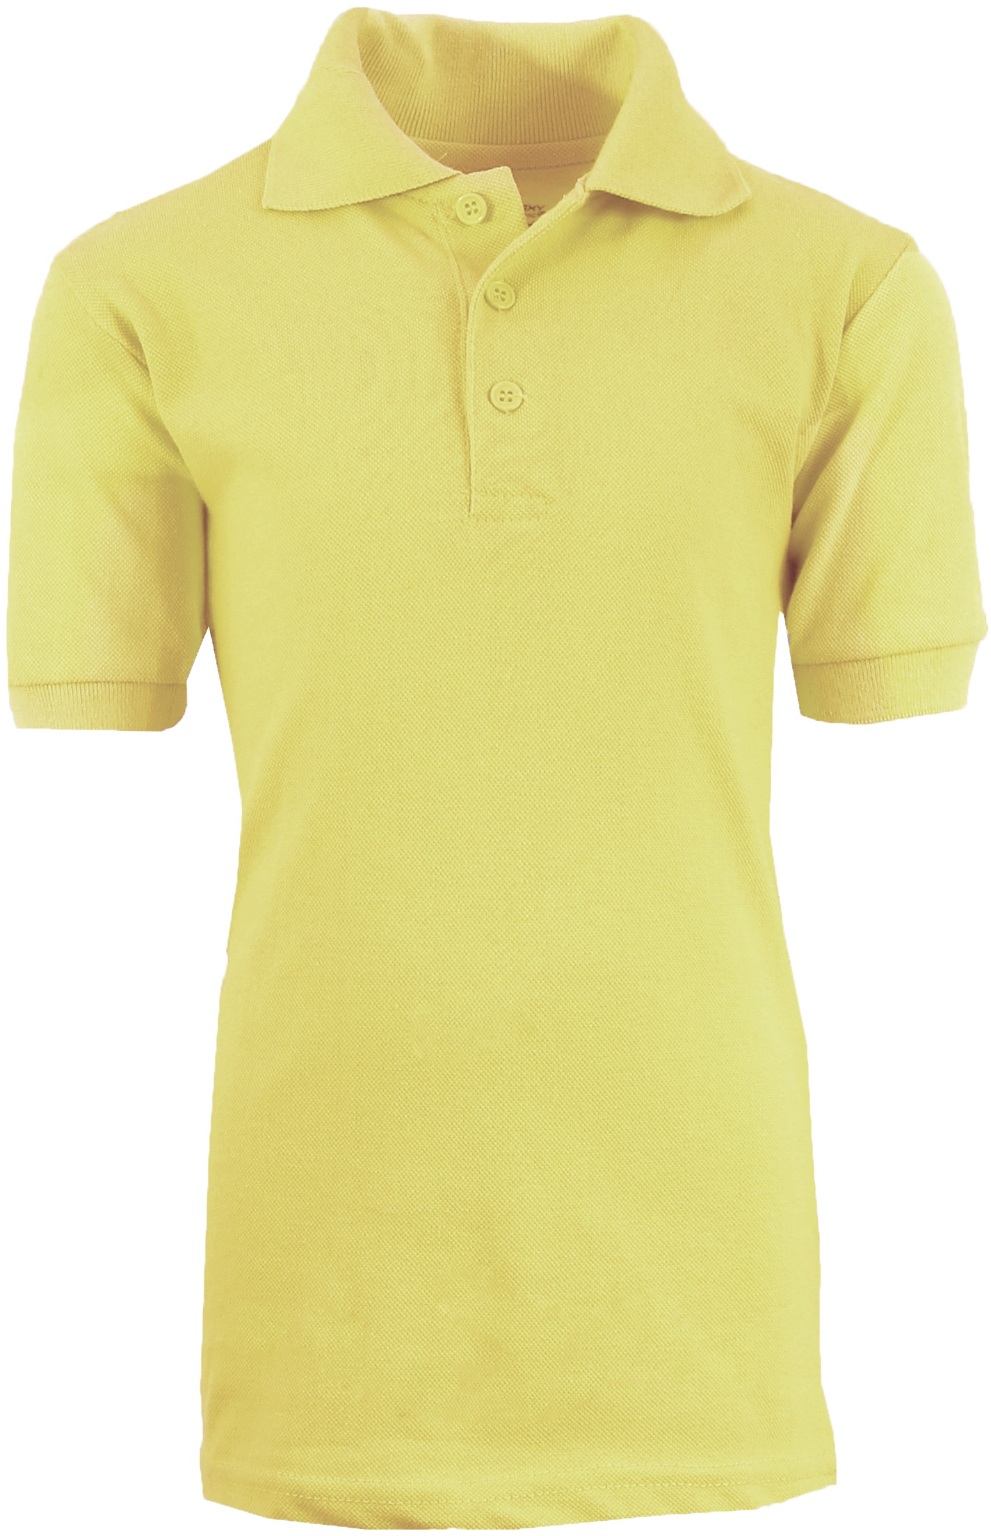 Wholesale Boys' Uniform Polo Shirts - Yellow, Size 4 - 7 - DollarDays